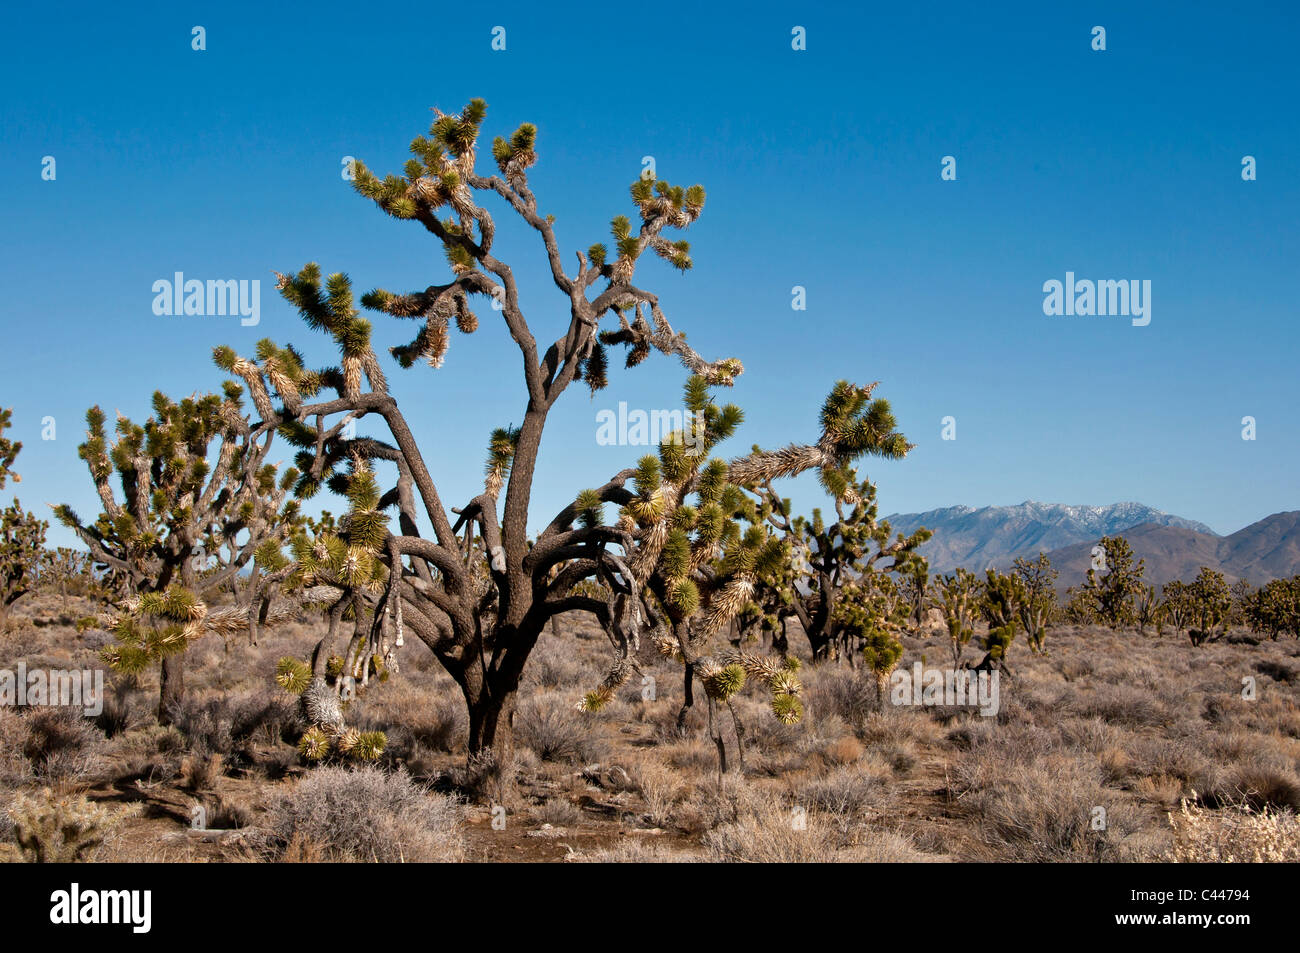 Mojave National Preserve, Californie, mars, USA, Amérique, Joshua trees, paysage, plantes, arbres Banque D'Images